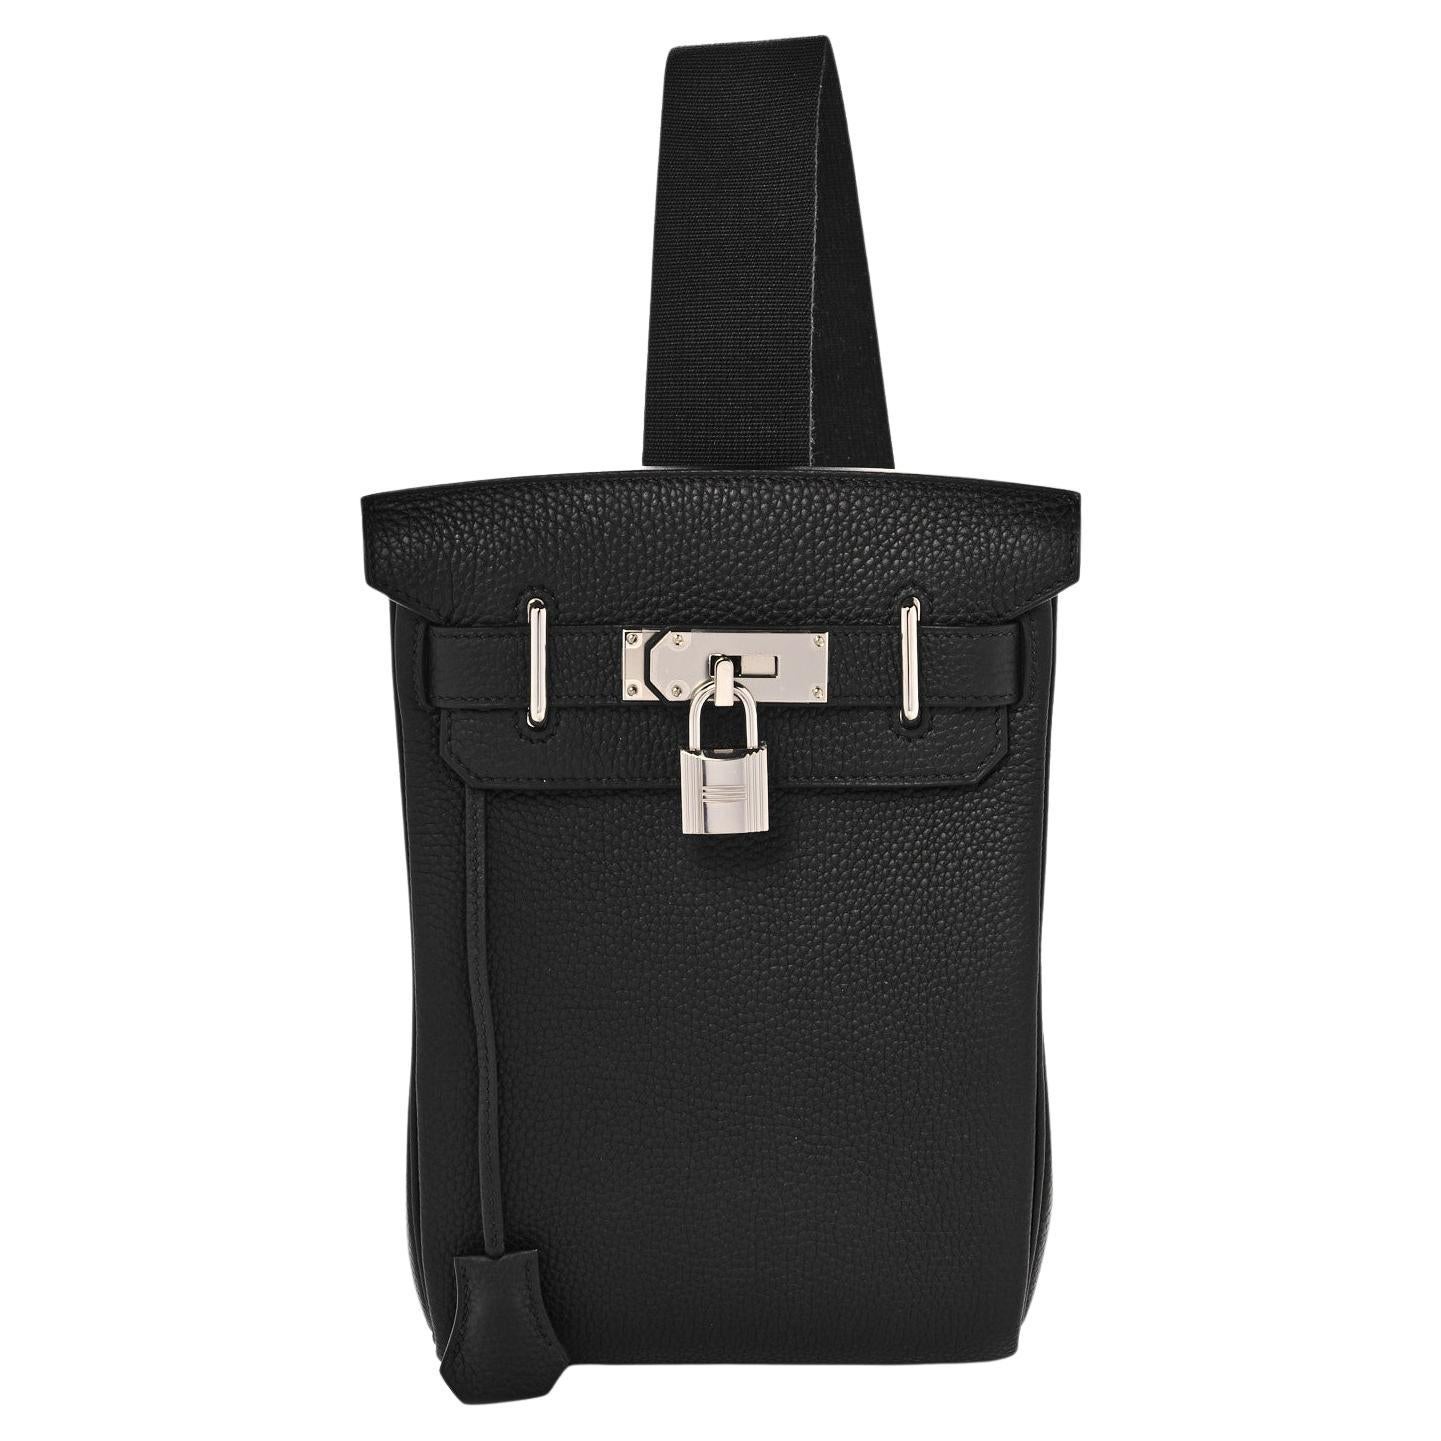 Hermes men's bag  Bags, Leather handbags, Fashion bags